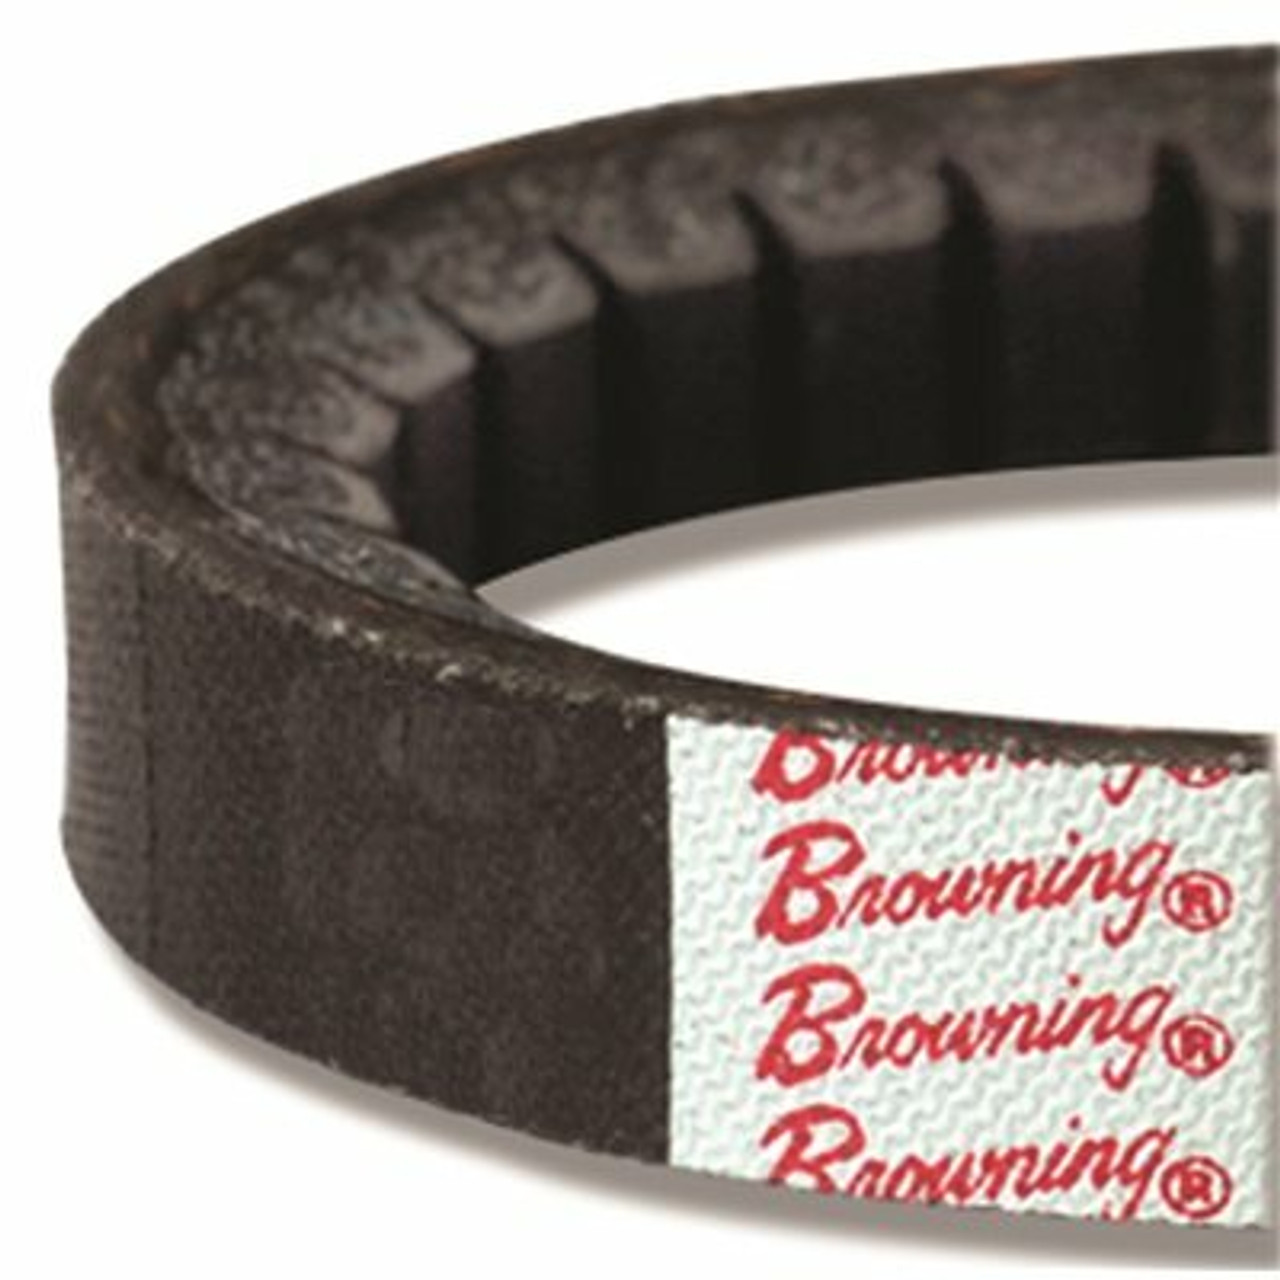 Browning Mfg. Browning V Belt, Bx54, 21/32 X 57 In.